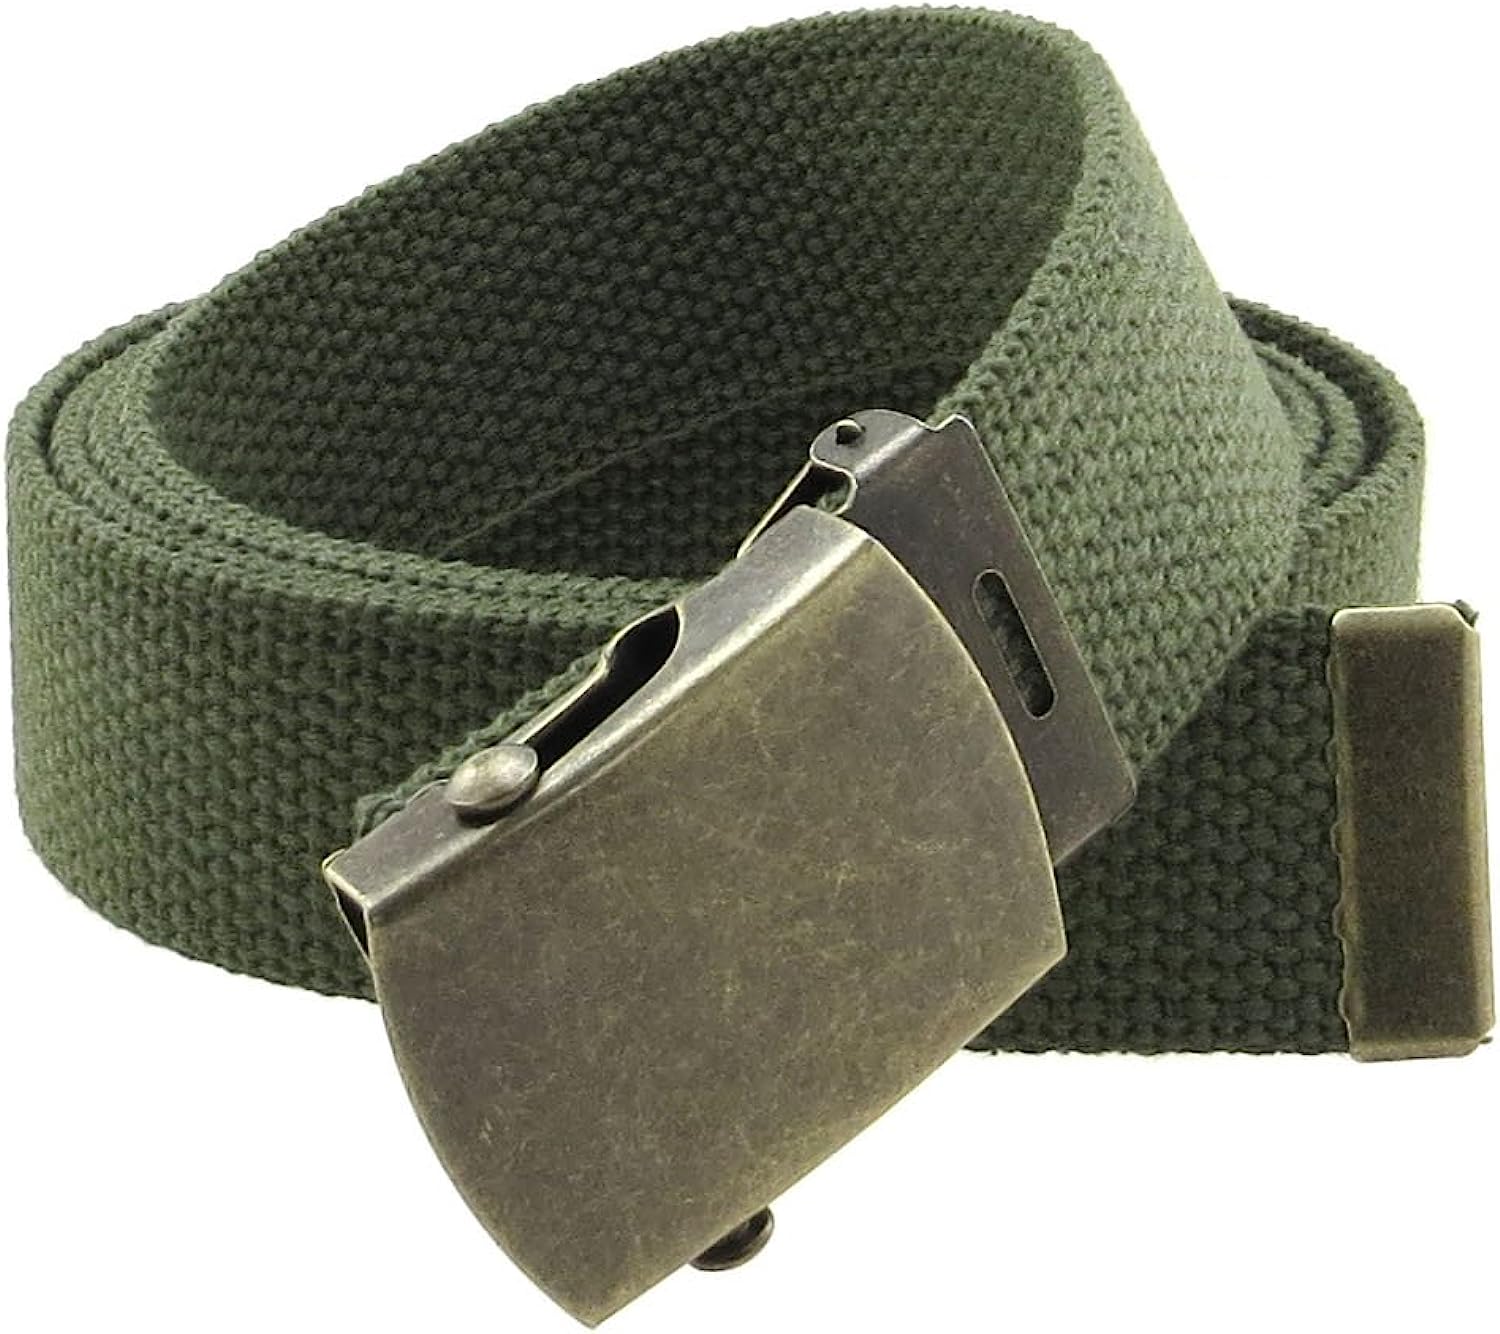 BC Belts Military Style Canvas Web Belt